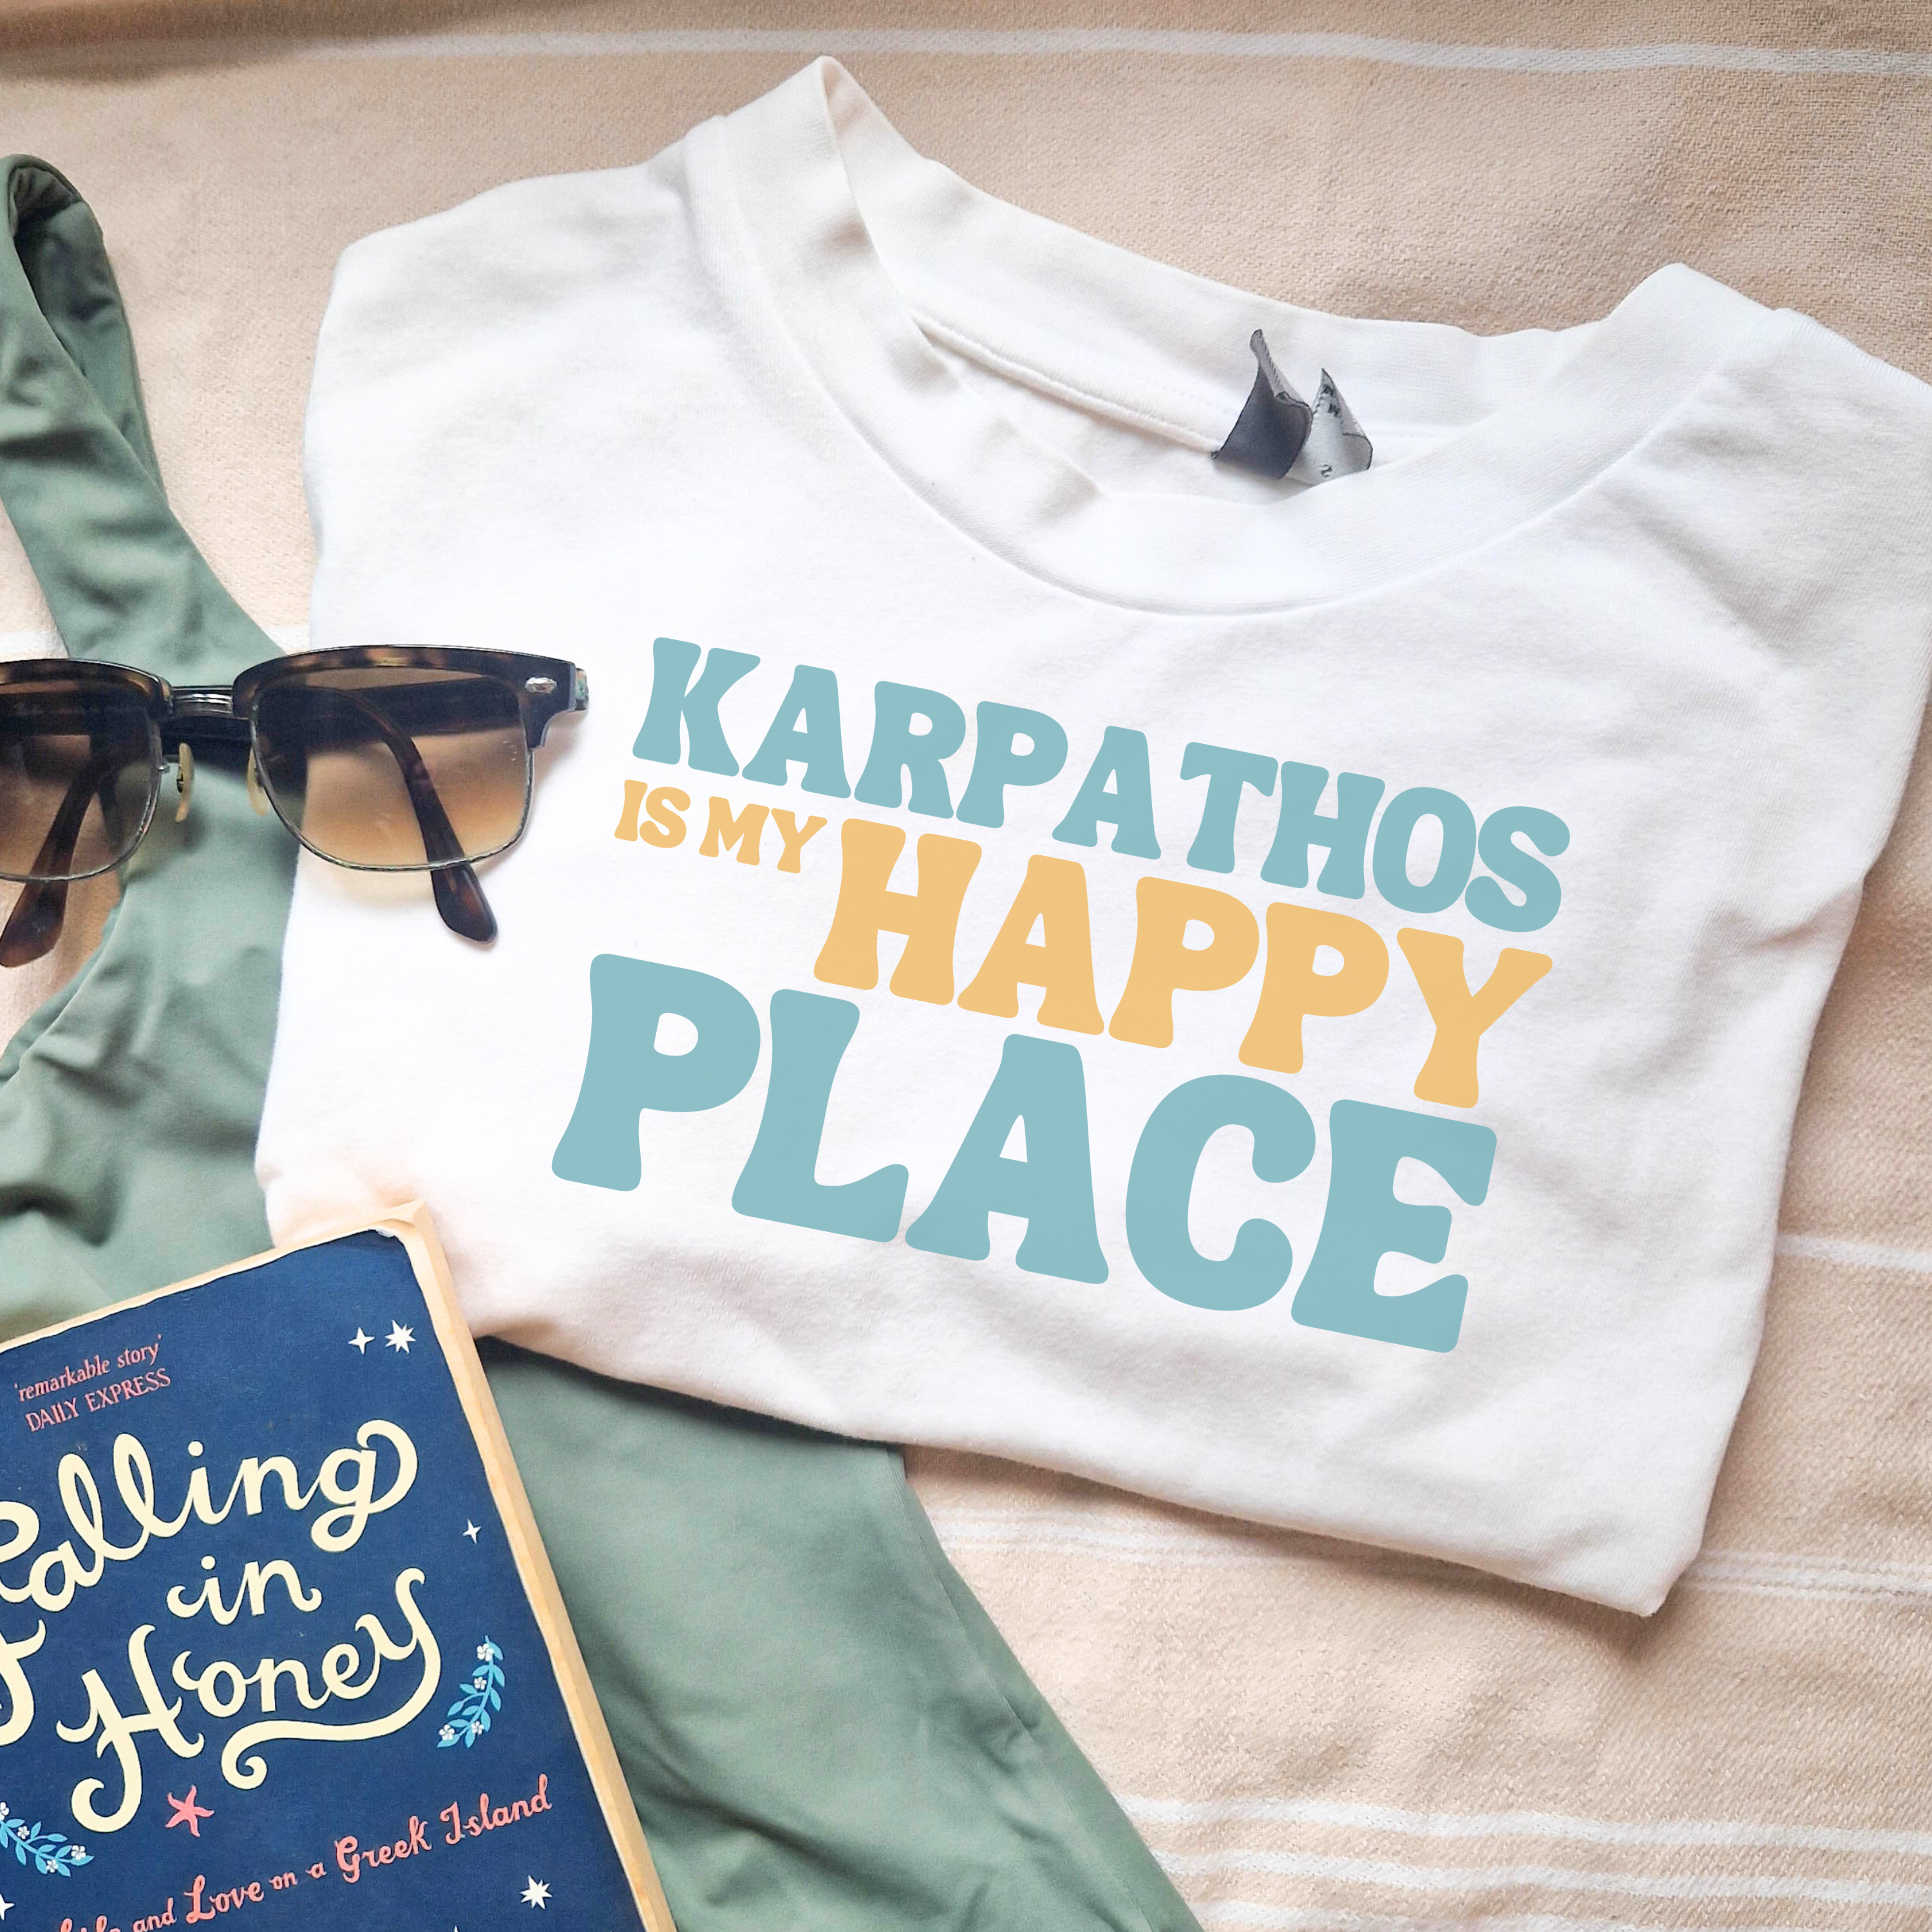 Karpathos is my happy place T-shirt